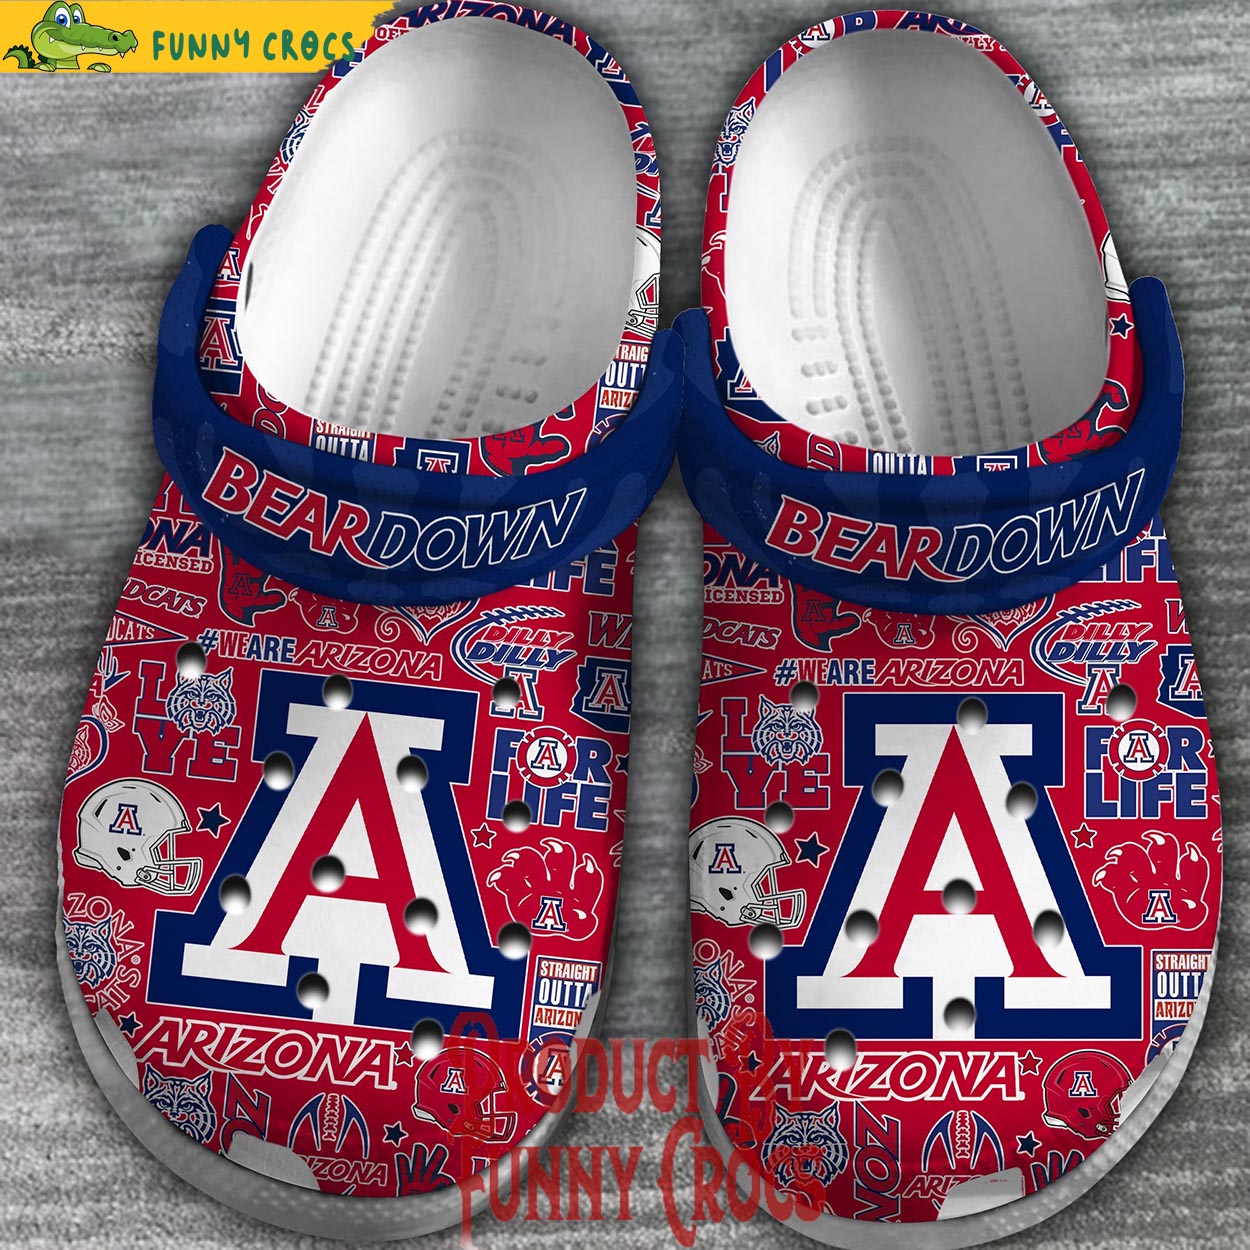 Arizona Bear Down Crocs Shoes